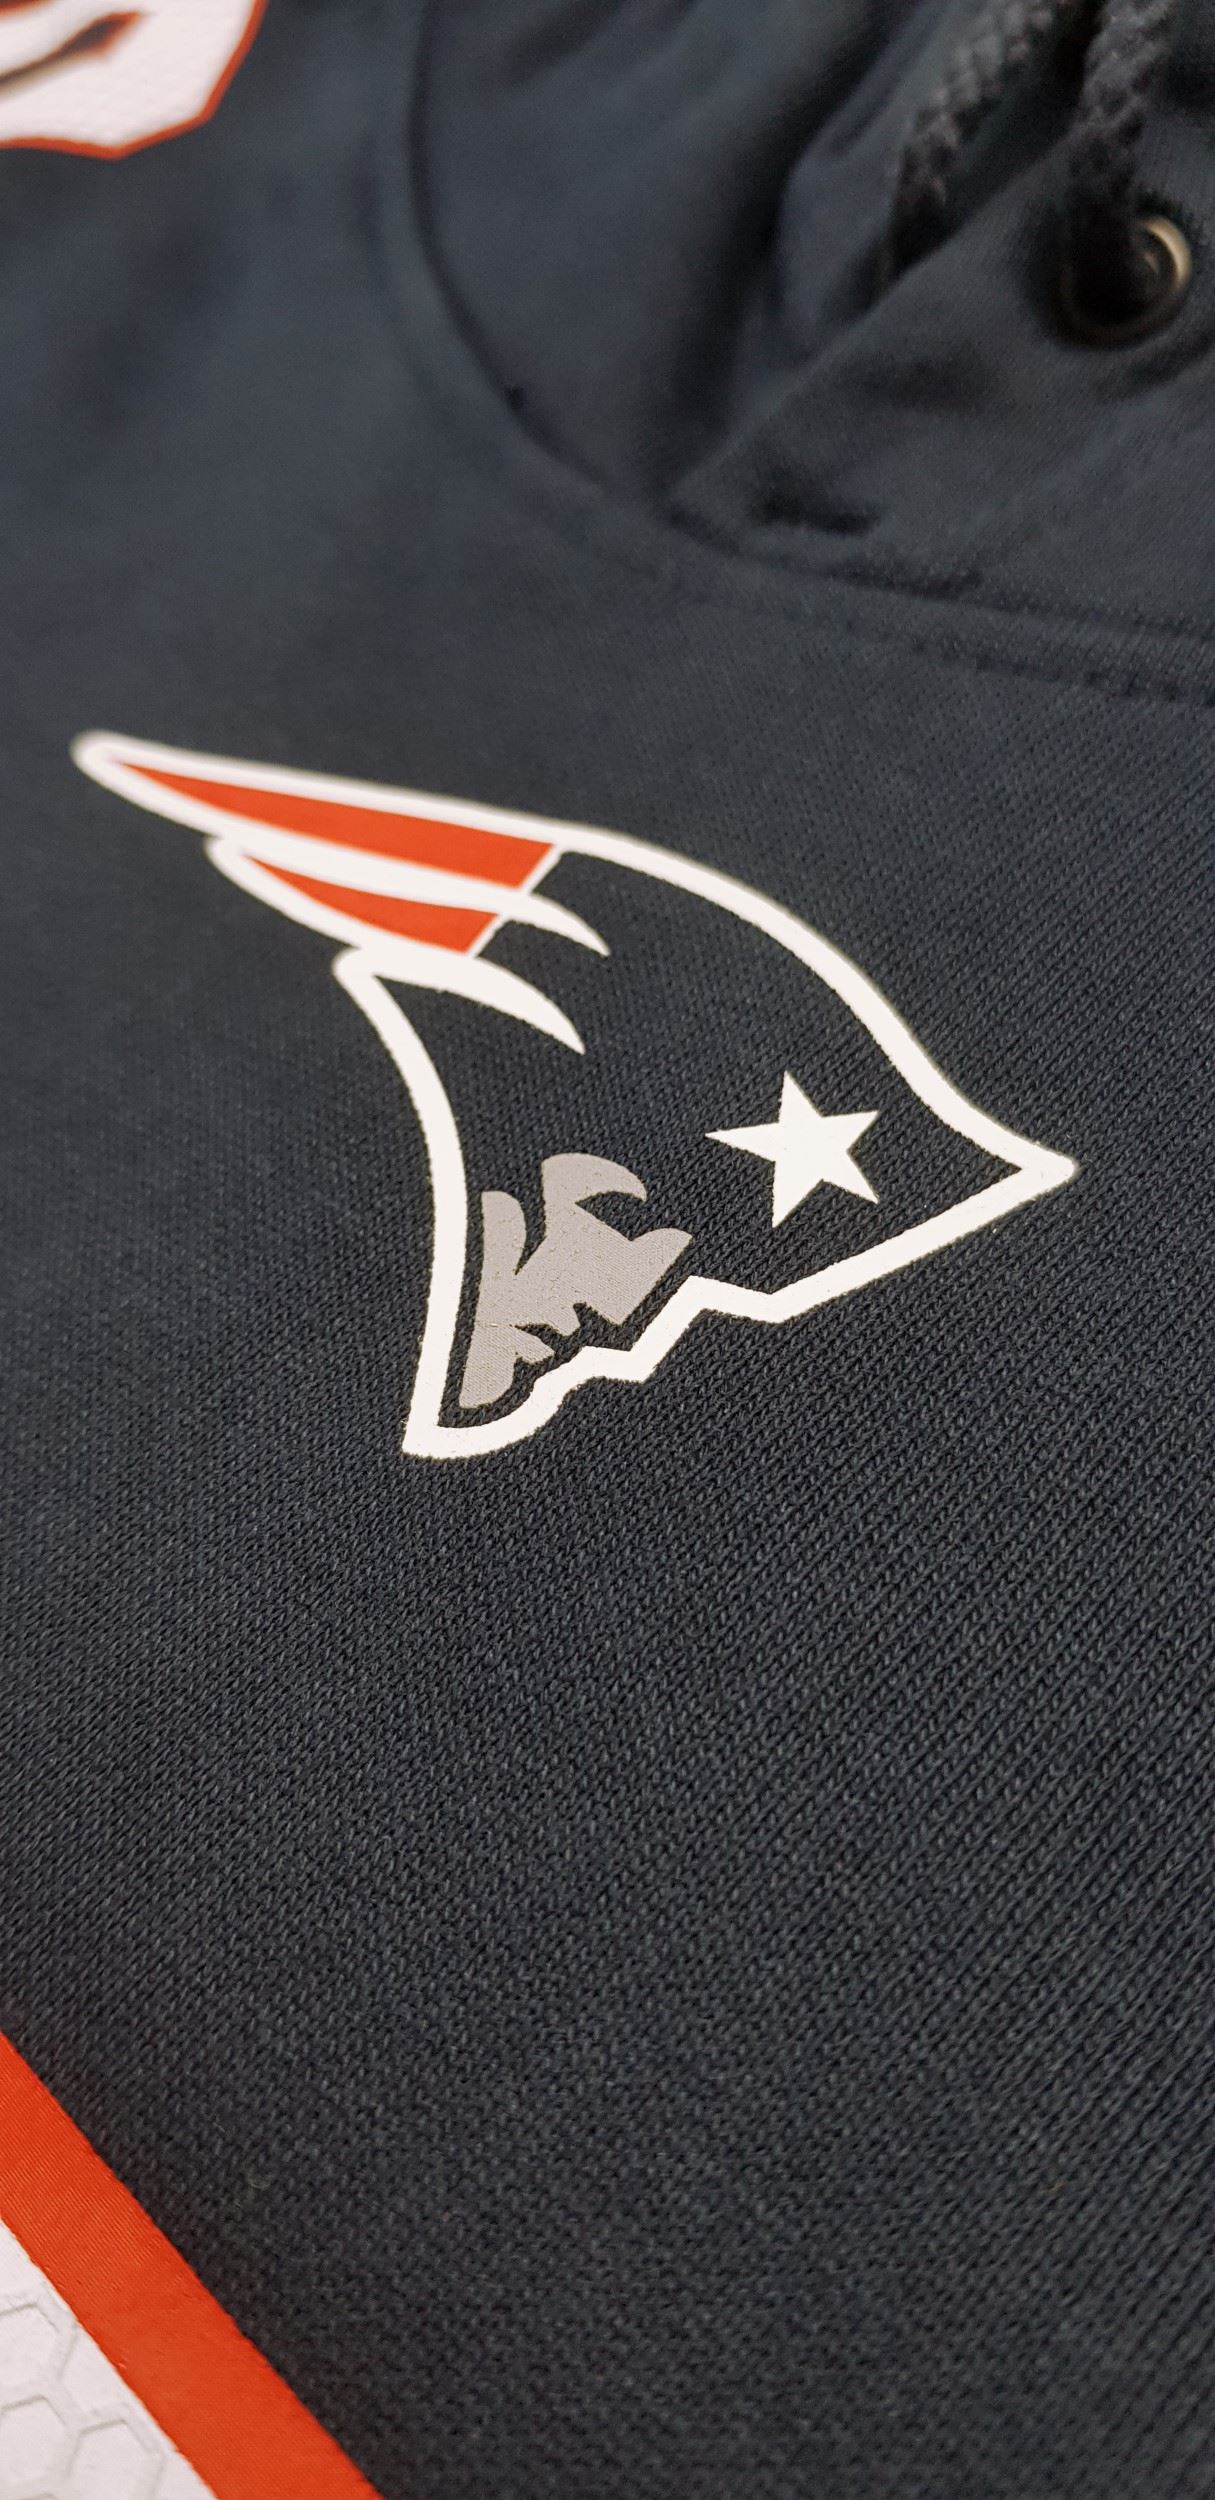 New England Patriots NFL Established Number Navy Hoody New Era